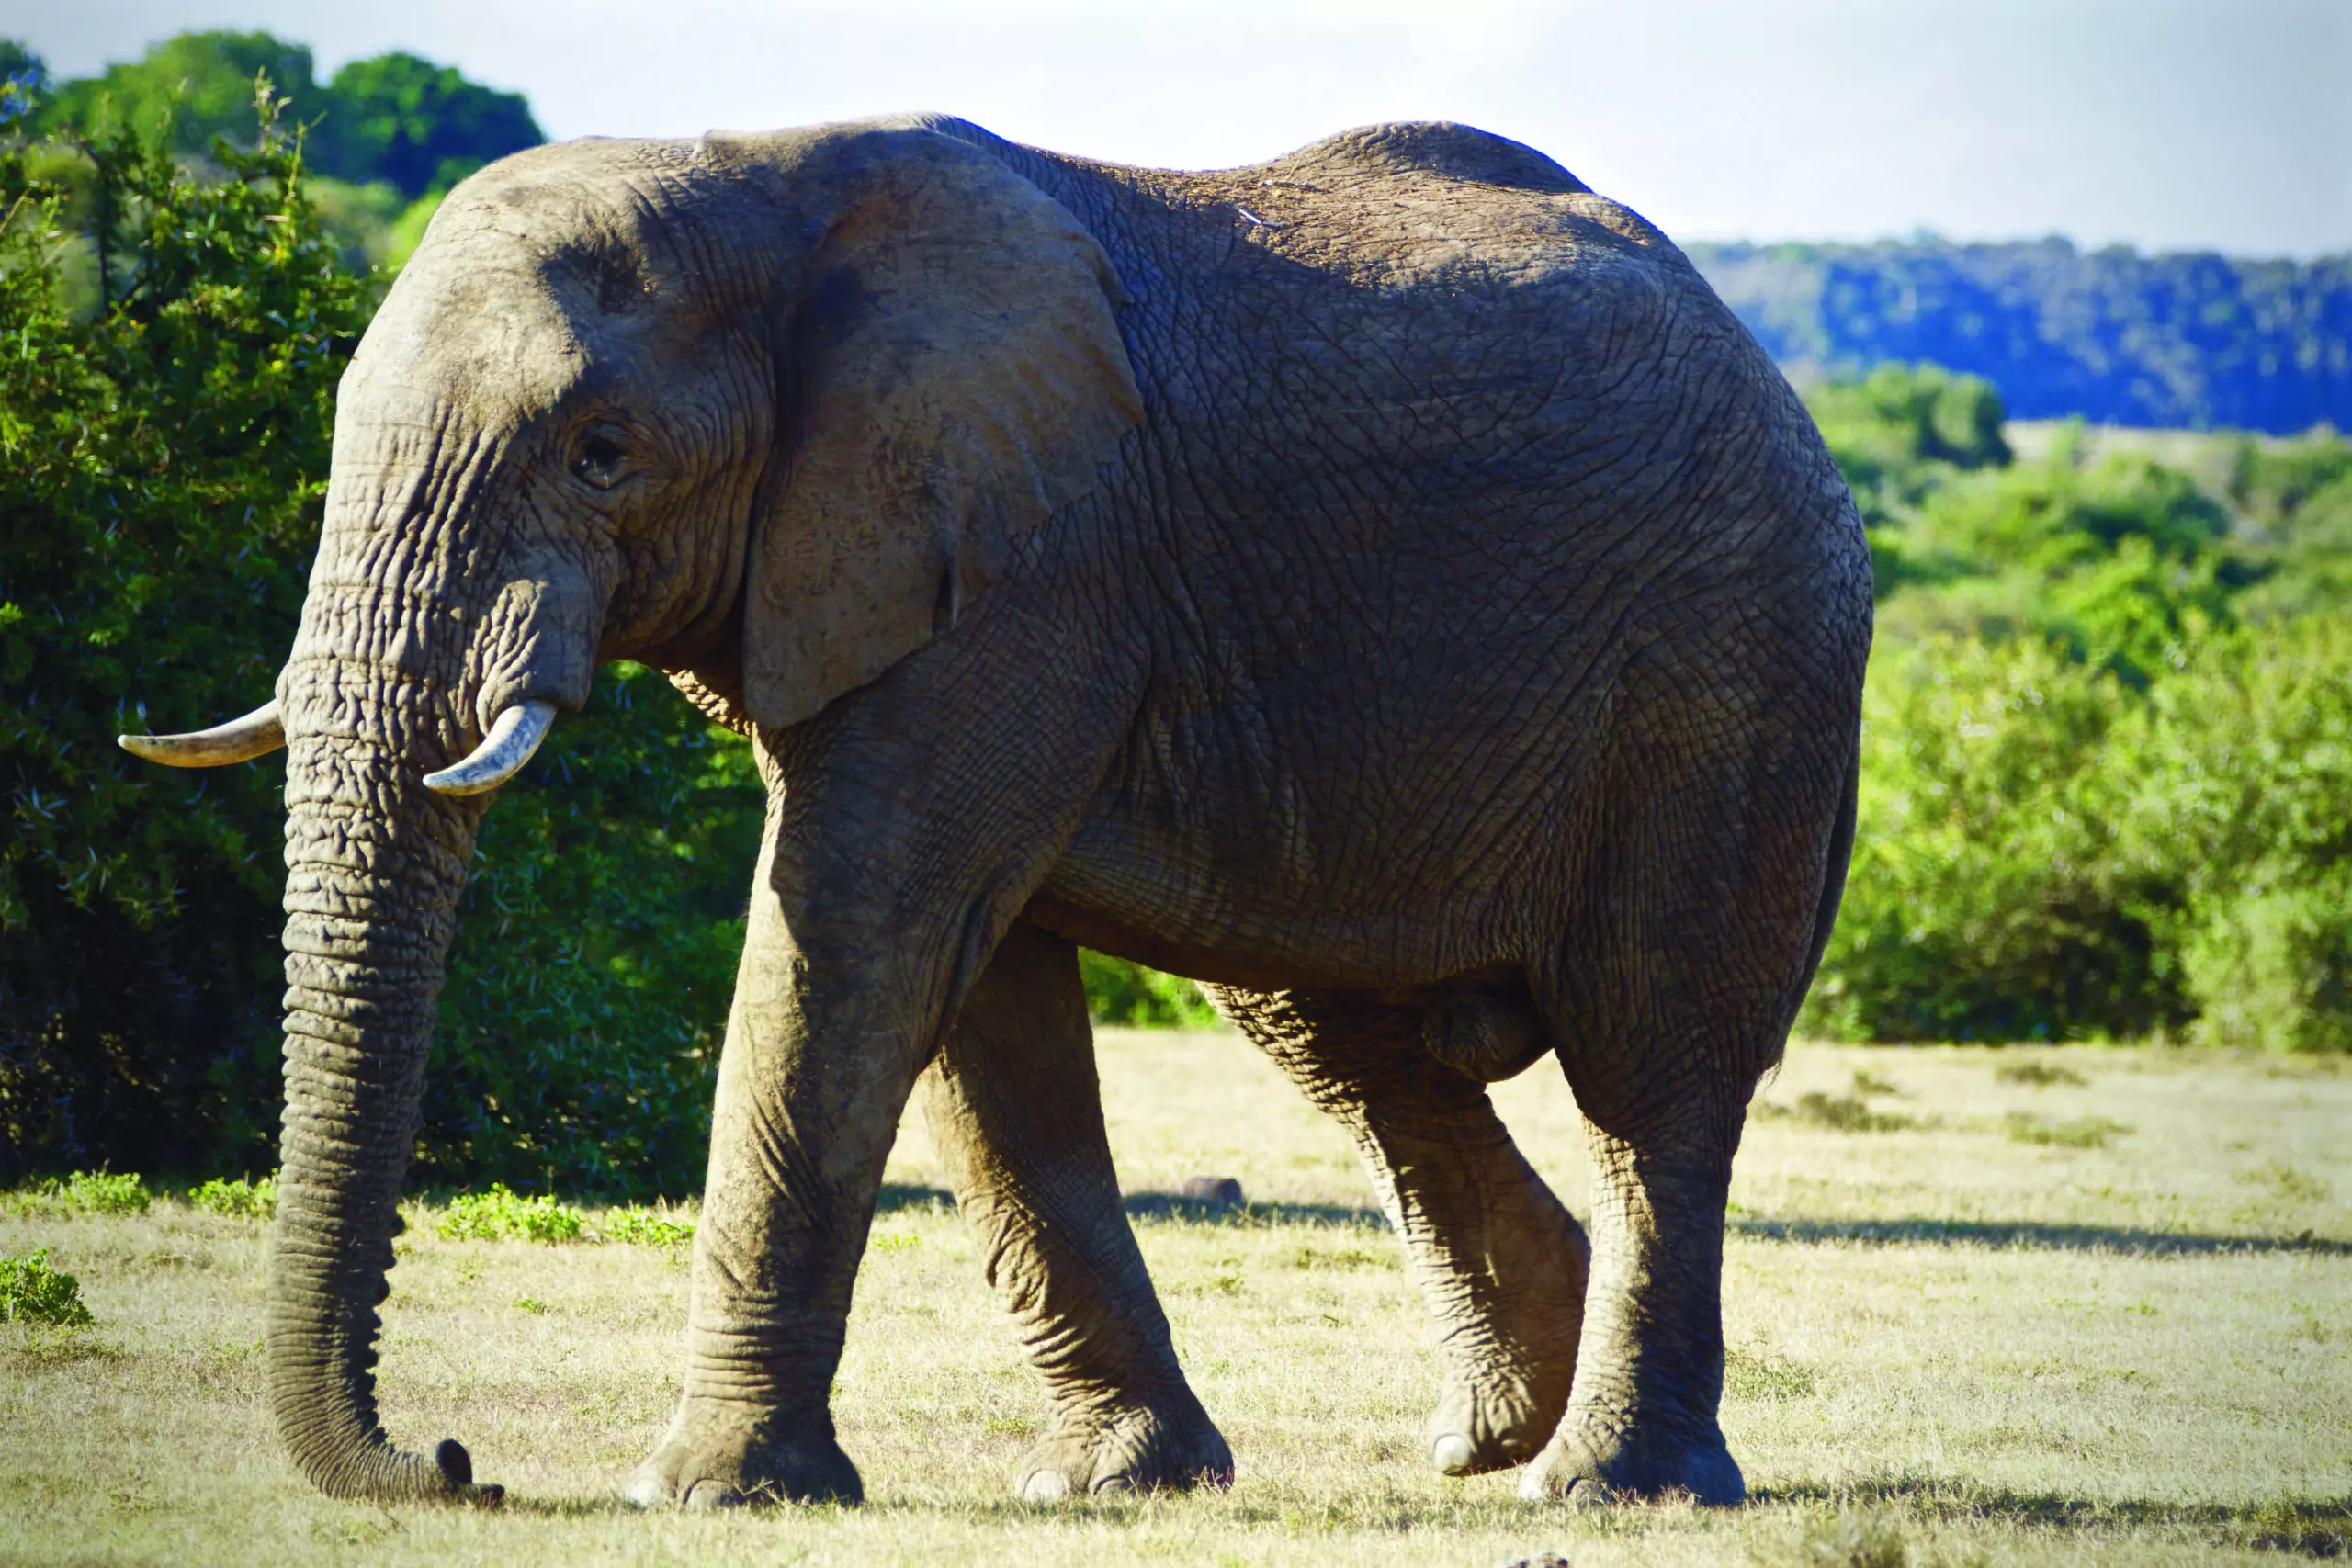 Wandbild (3439) Elephant 7 präsentiert: Tiere,Aus Afrika